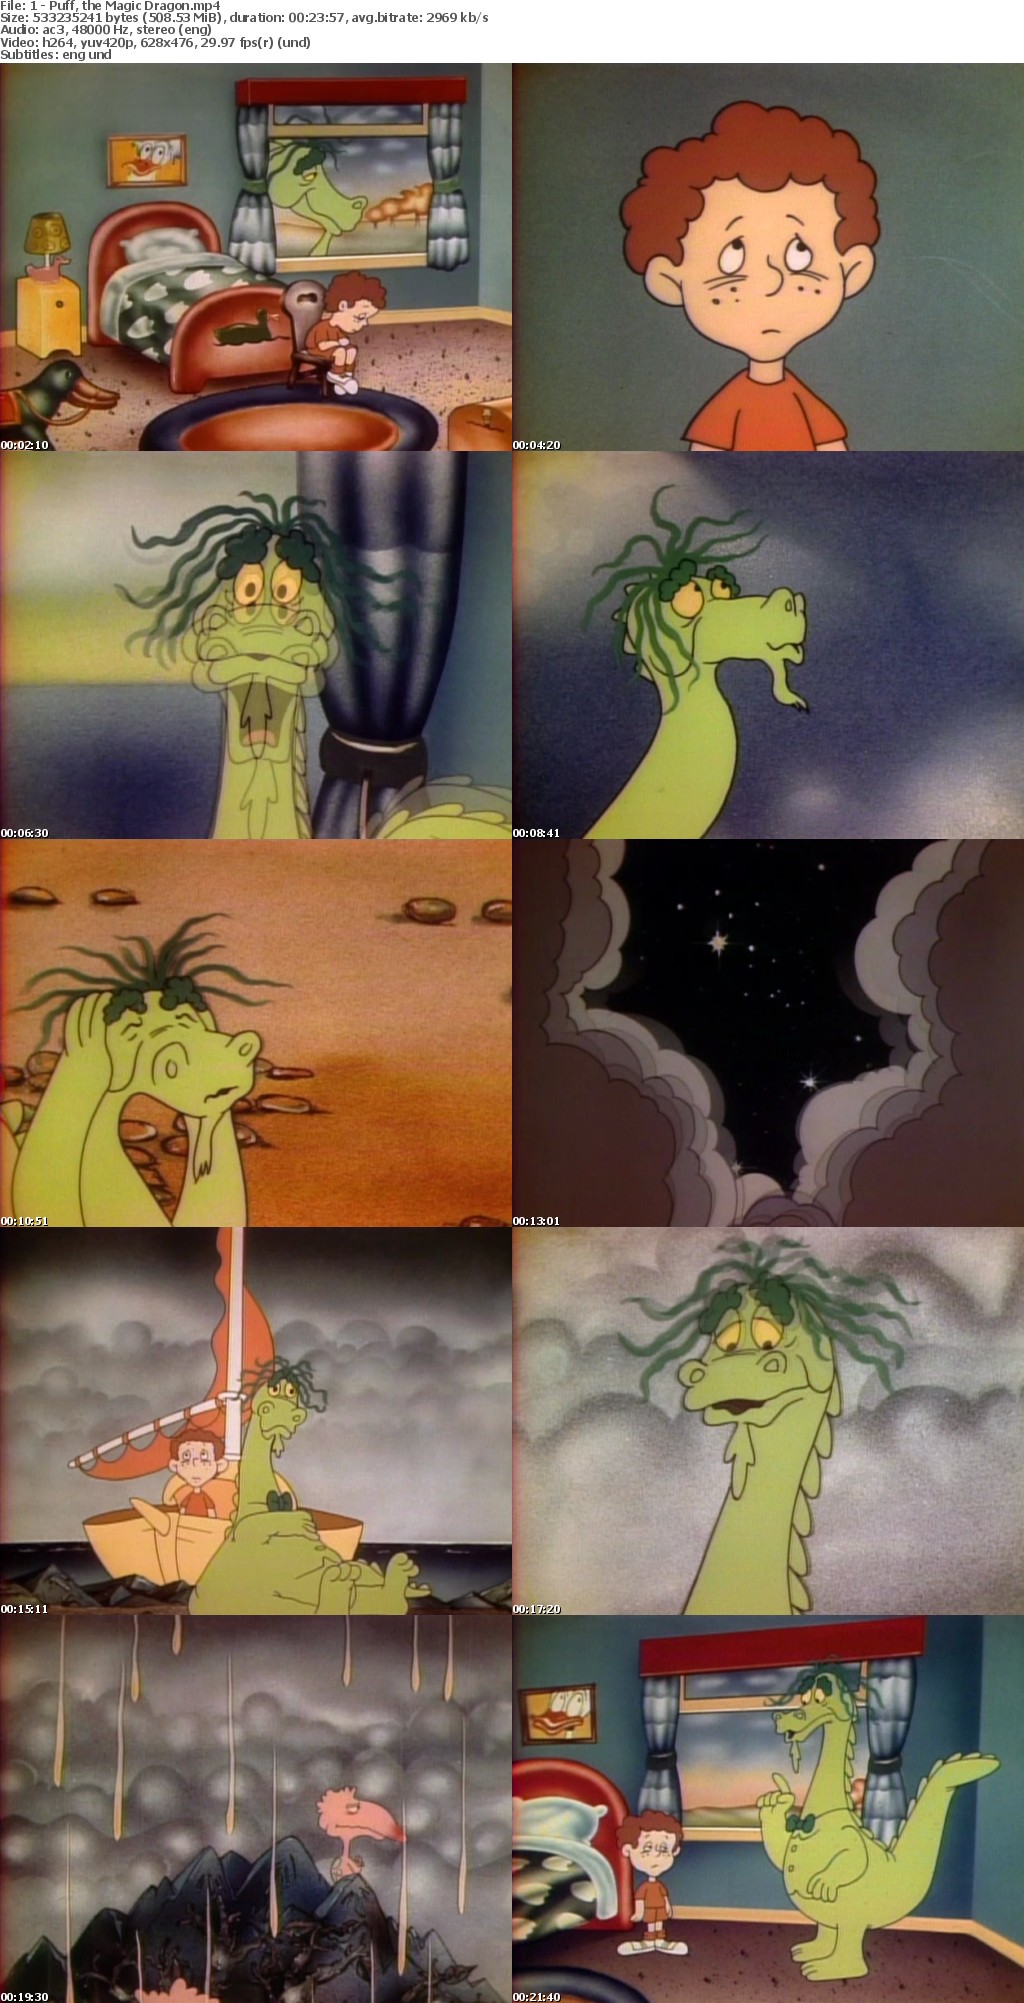 Puff, the Magic Dragon (Triple Cartoon Feature in MP4 format) Lando18